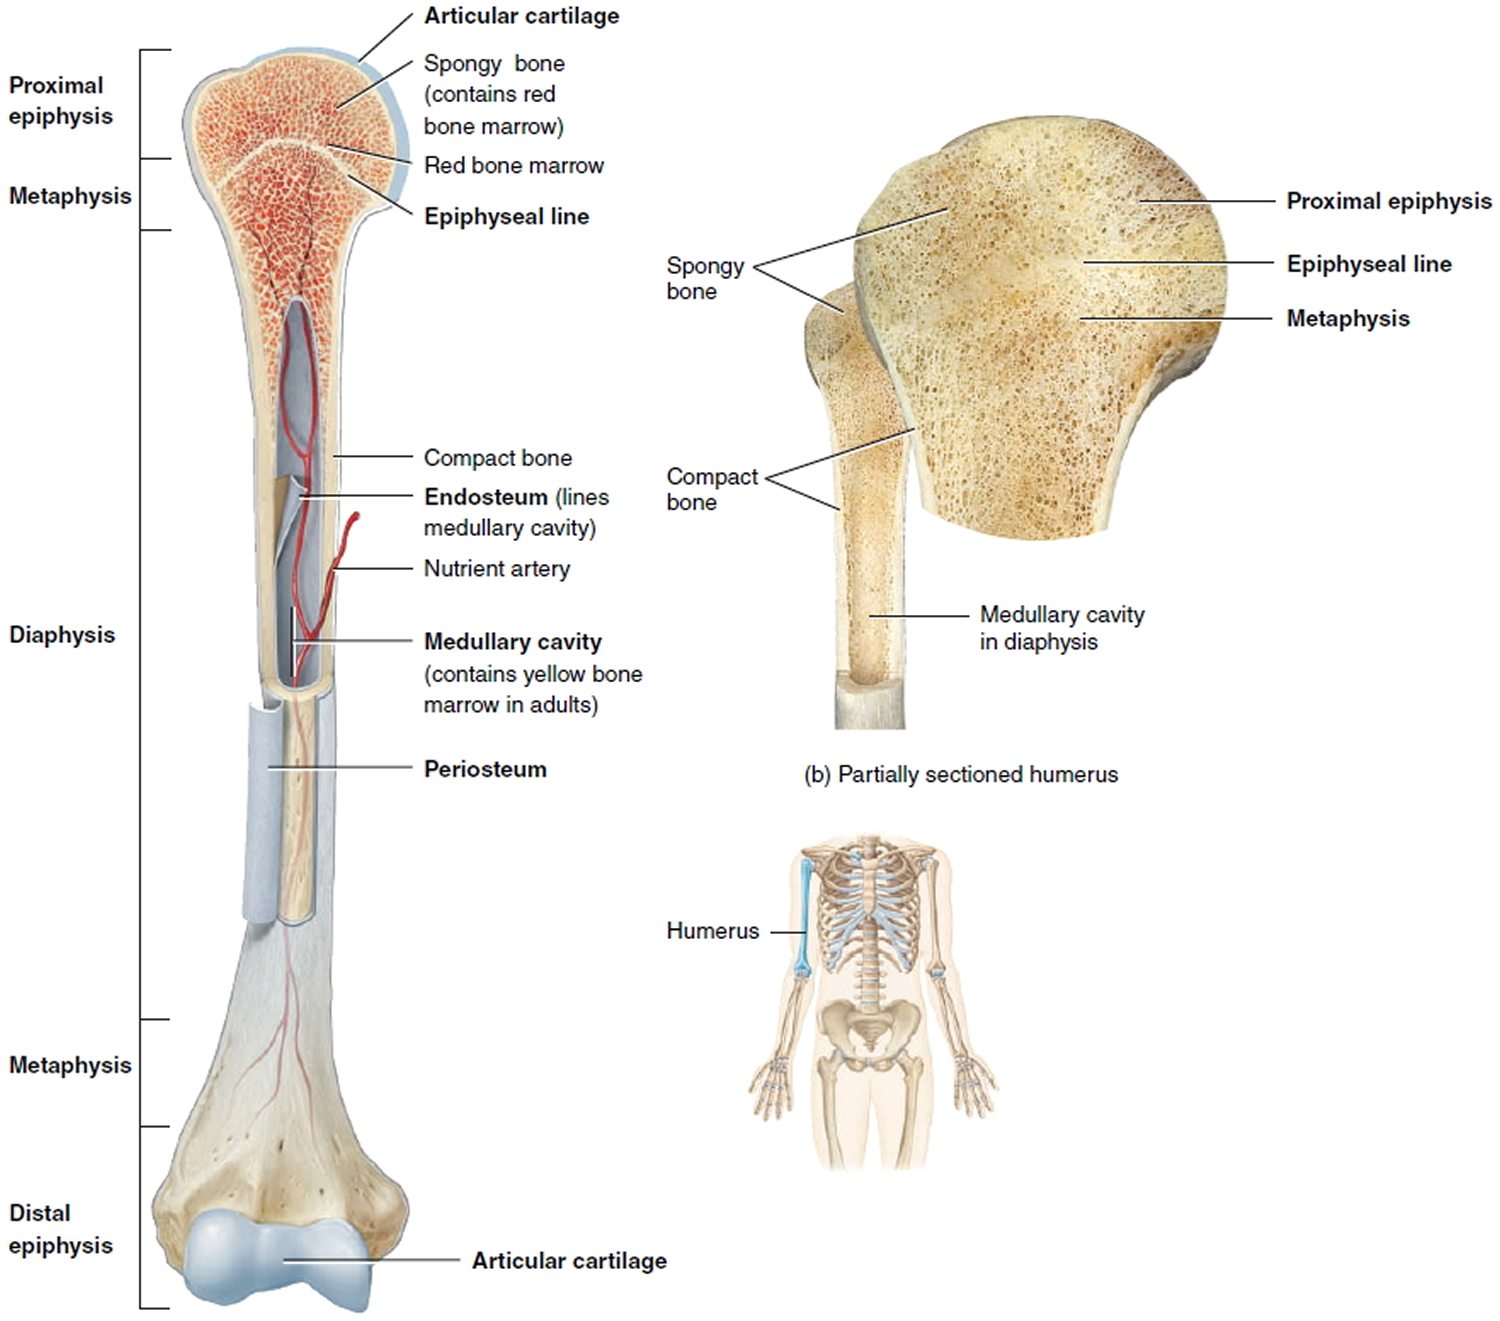 neither short nor flat bones contain a medullary cavity.